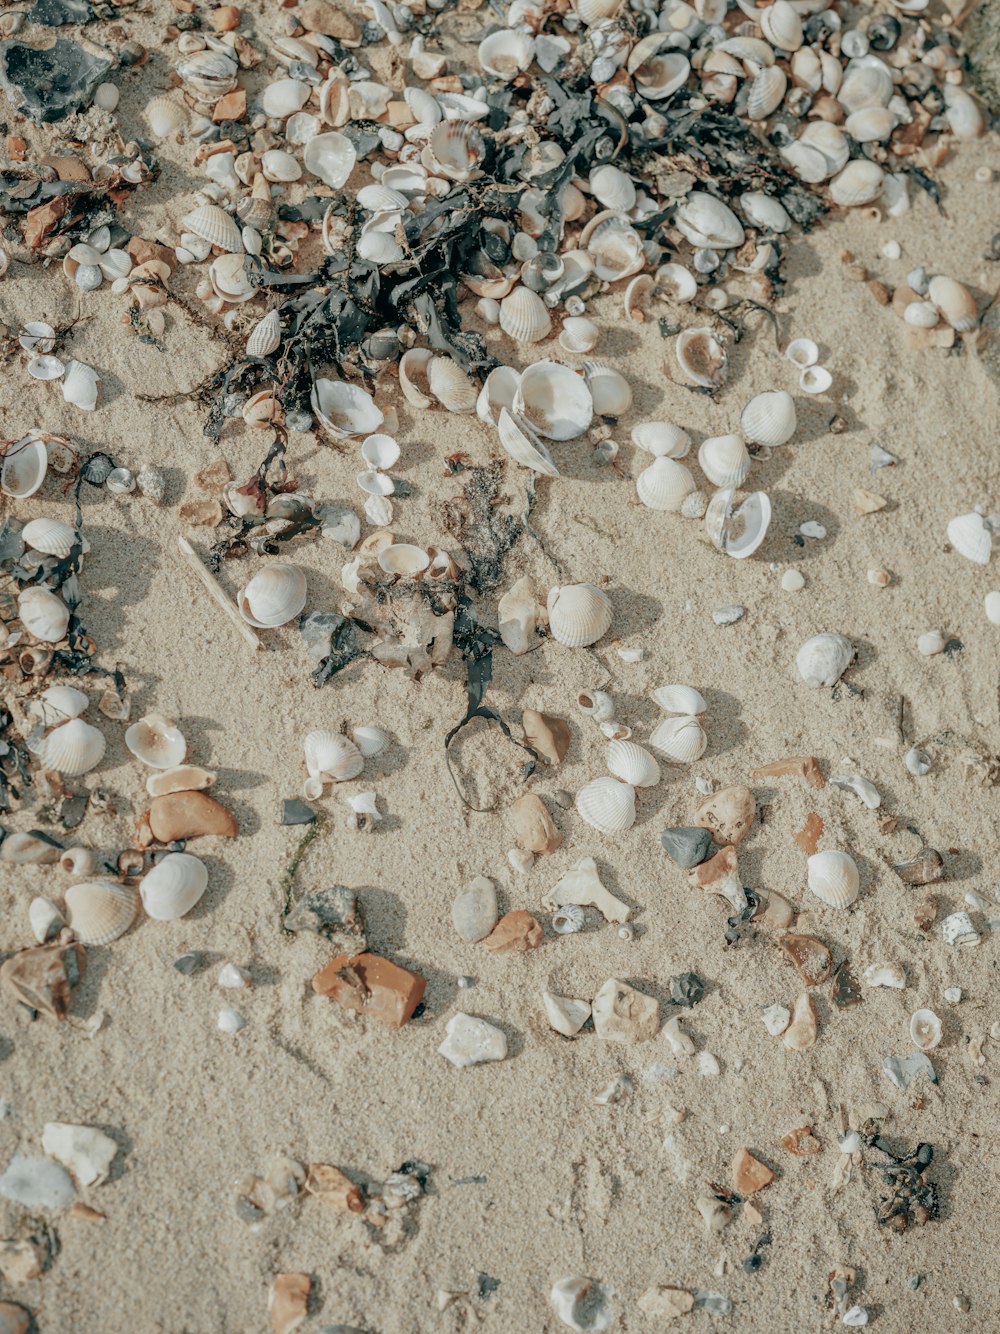 shells and seaweed on a sandy beach